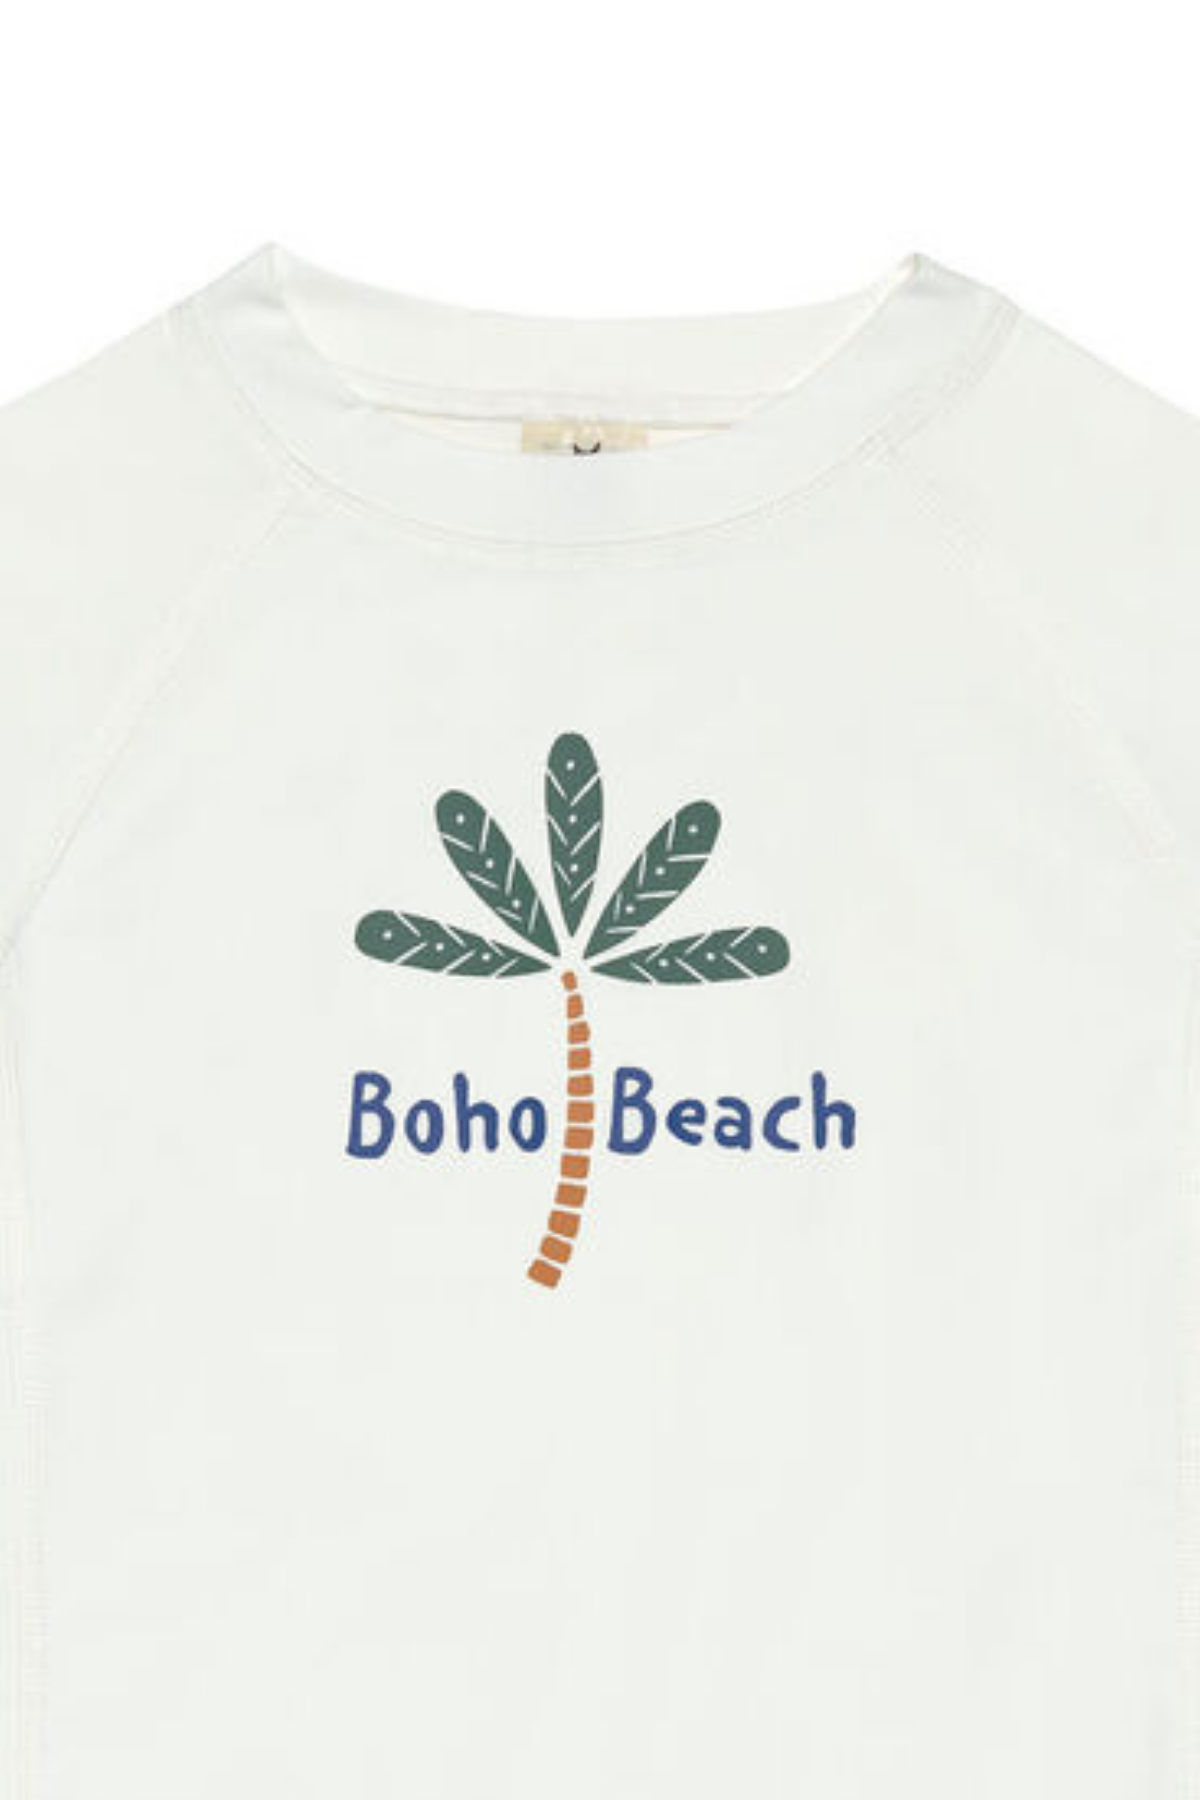 UV Long Sleeve Rashguard "Boho Beach"